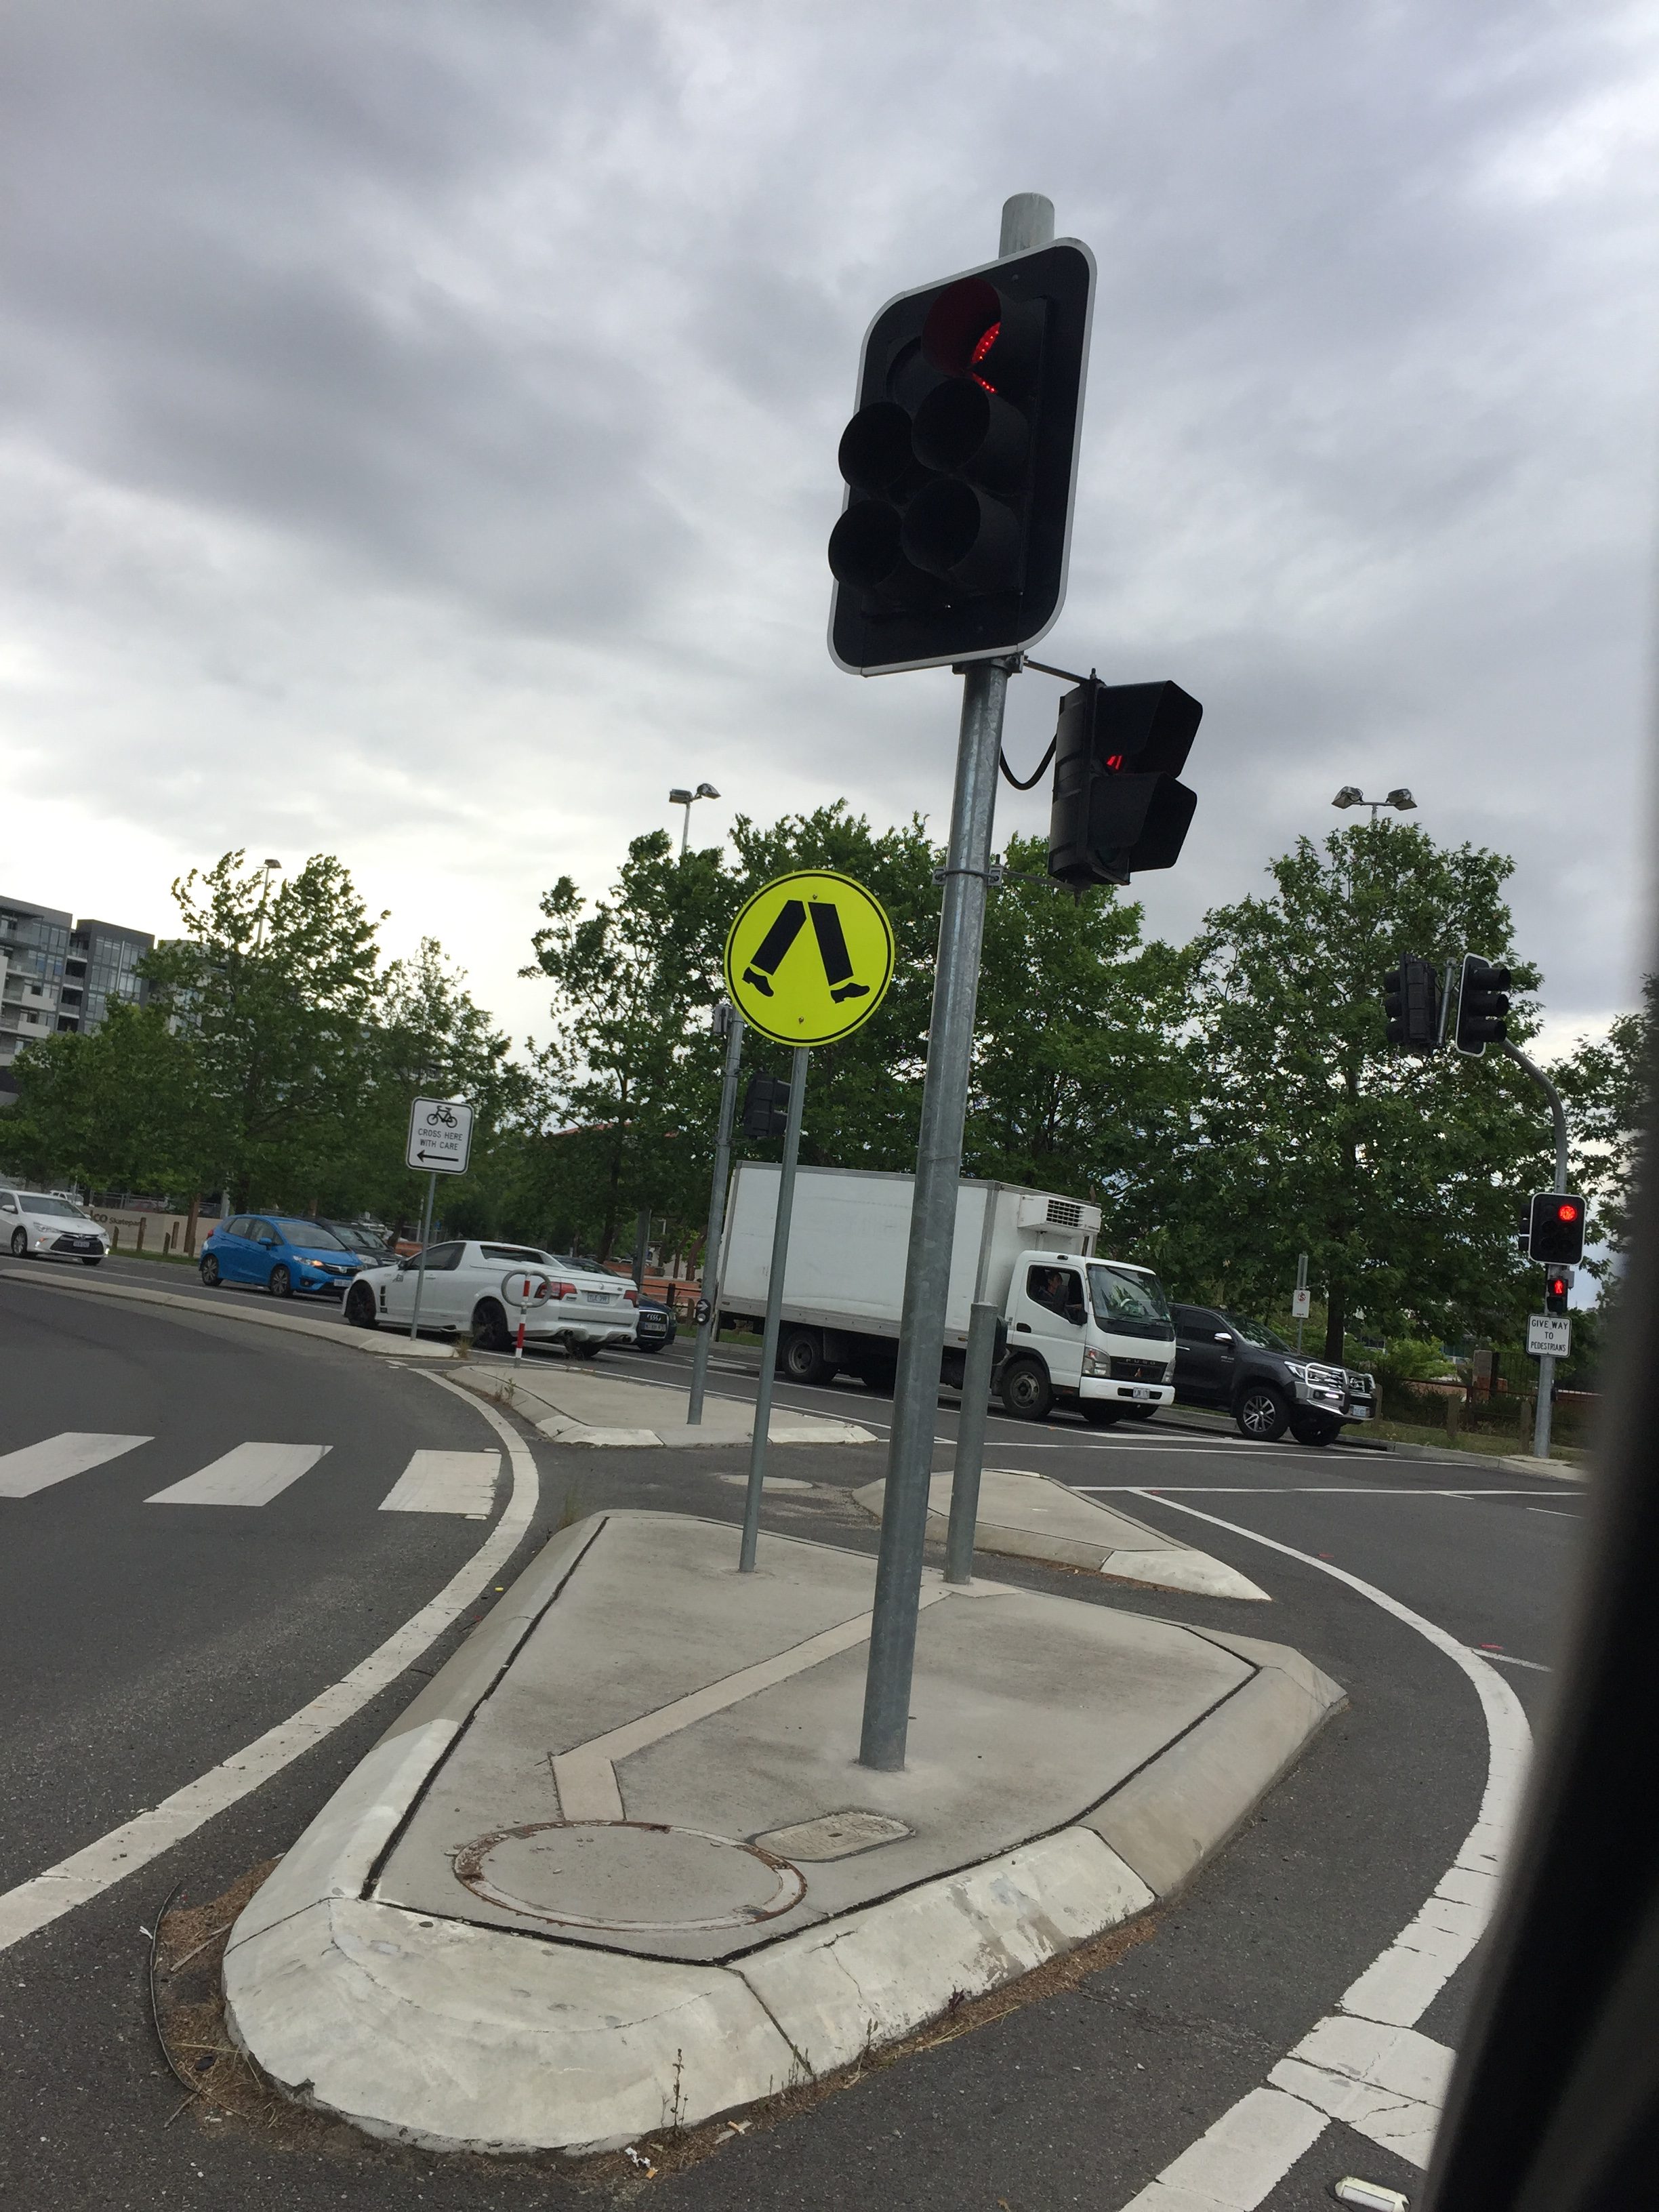 Australian pedestrian crossing sign of random legs